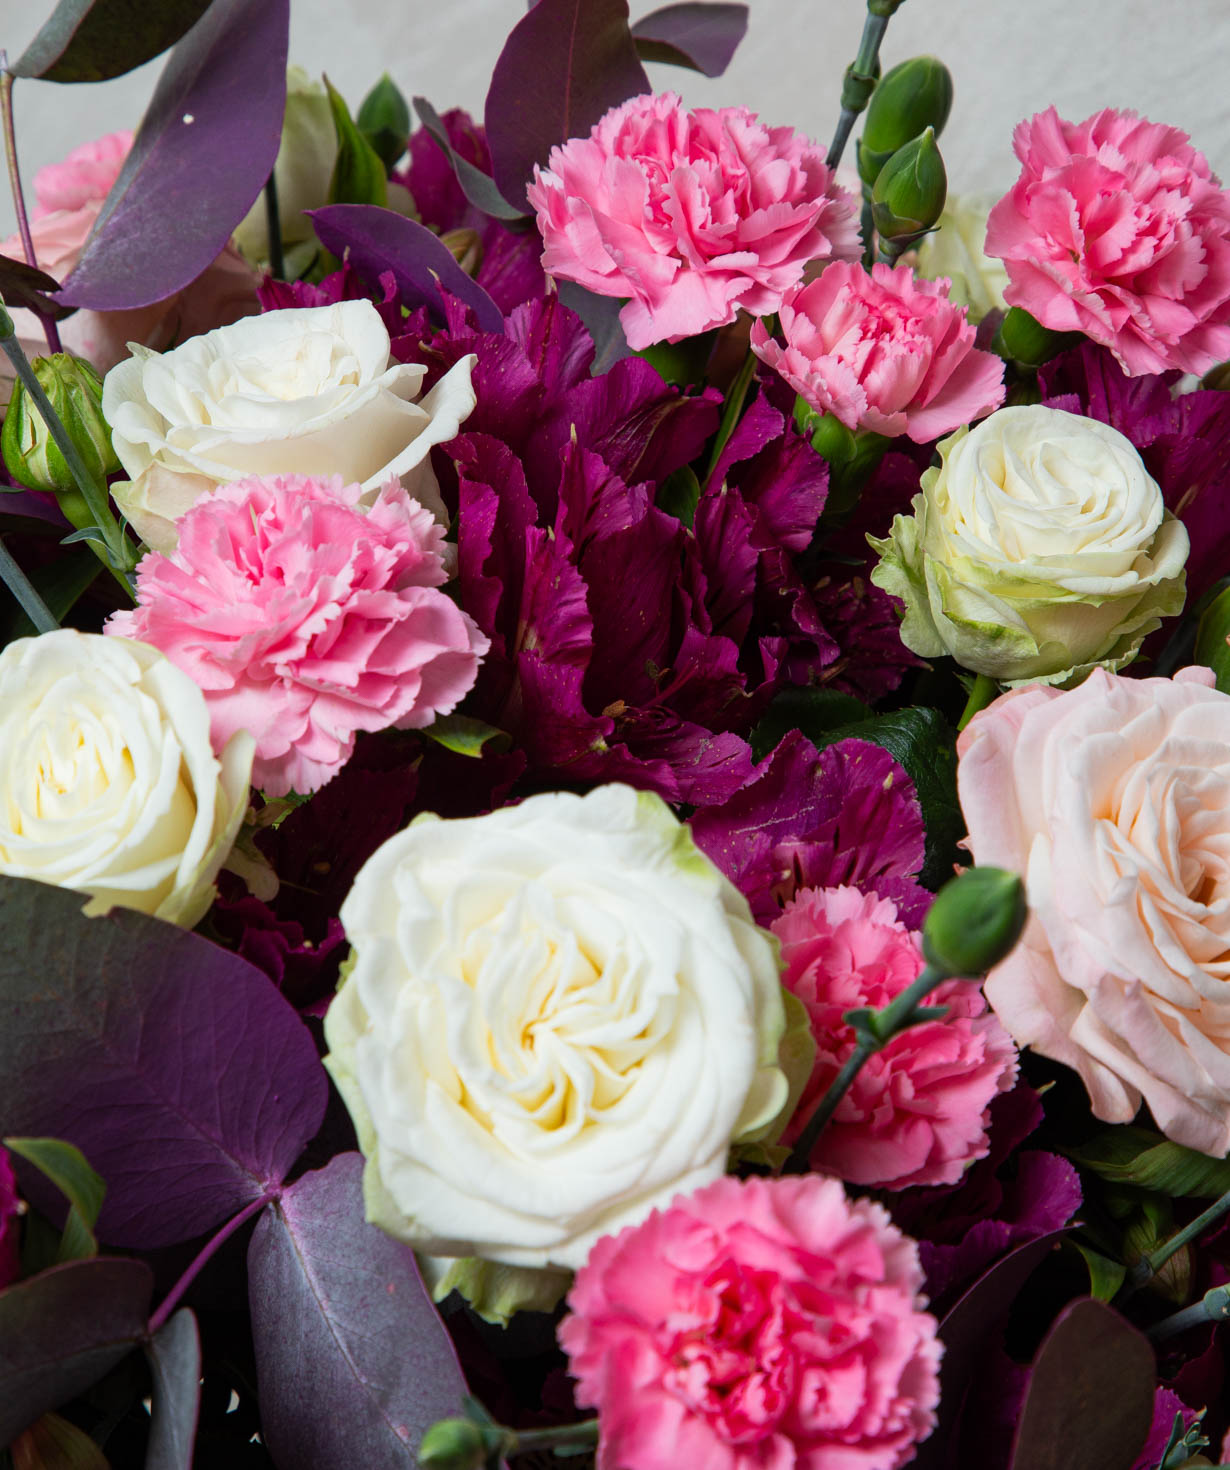 Bouquet «Tavolara» with spray roses and alstroemerias